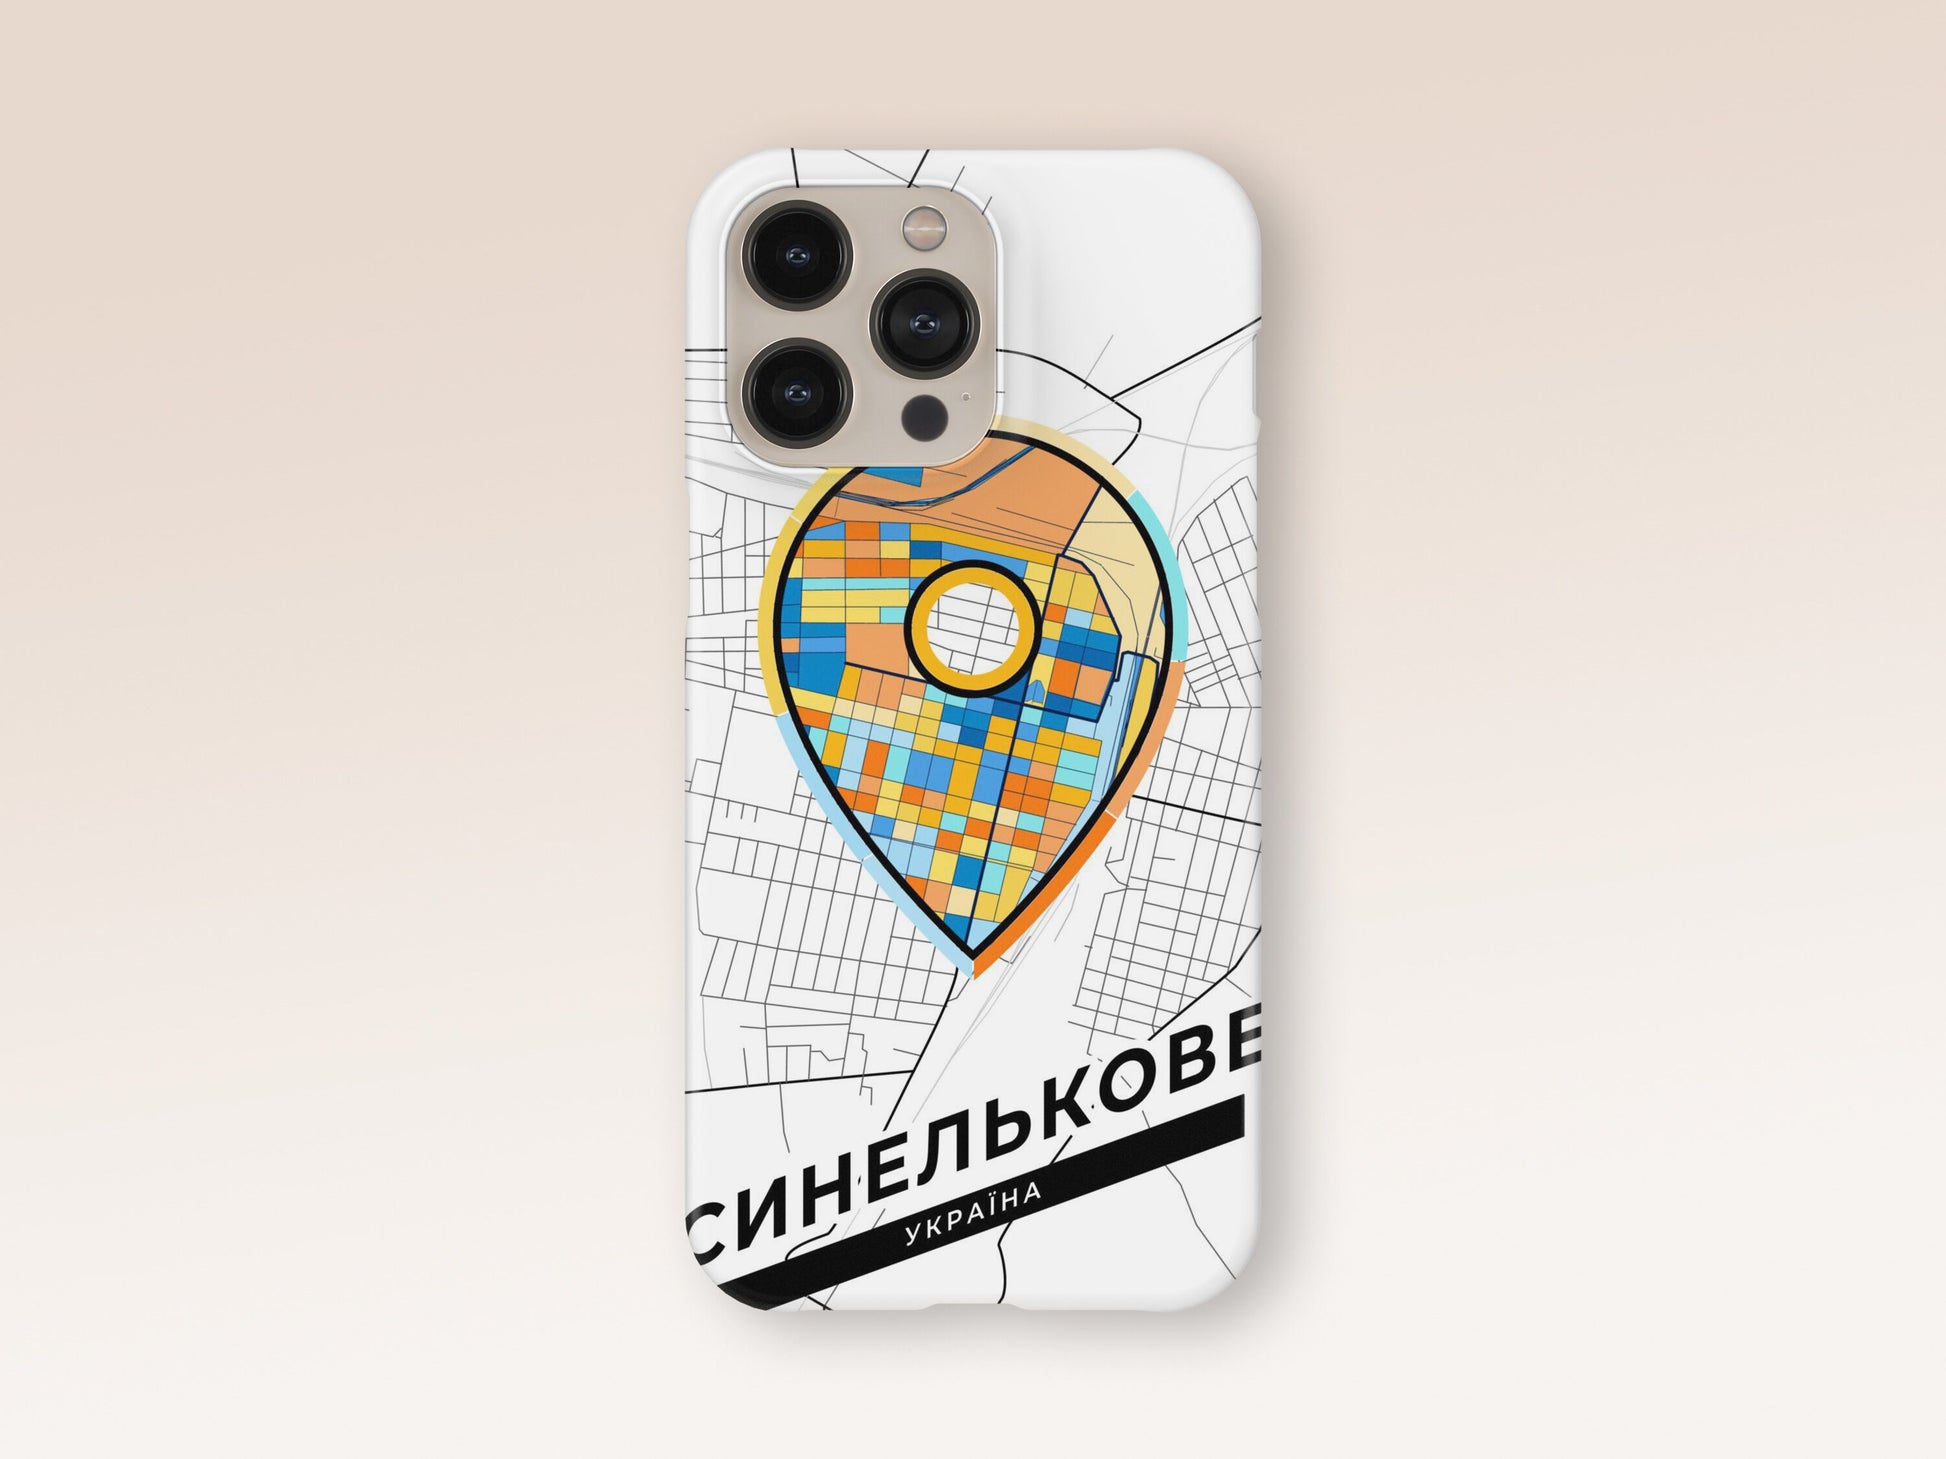 Synelnykove Ukraine slim phone case with colorful icon 1